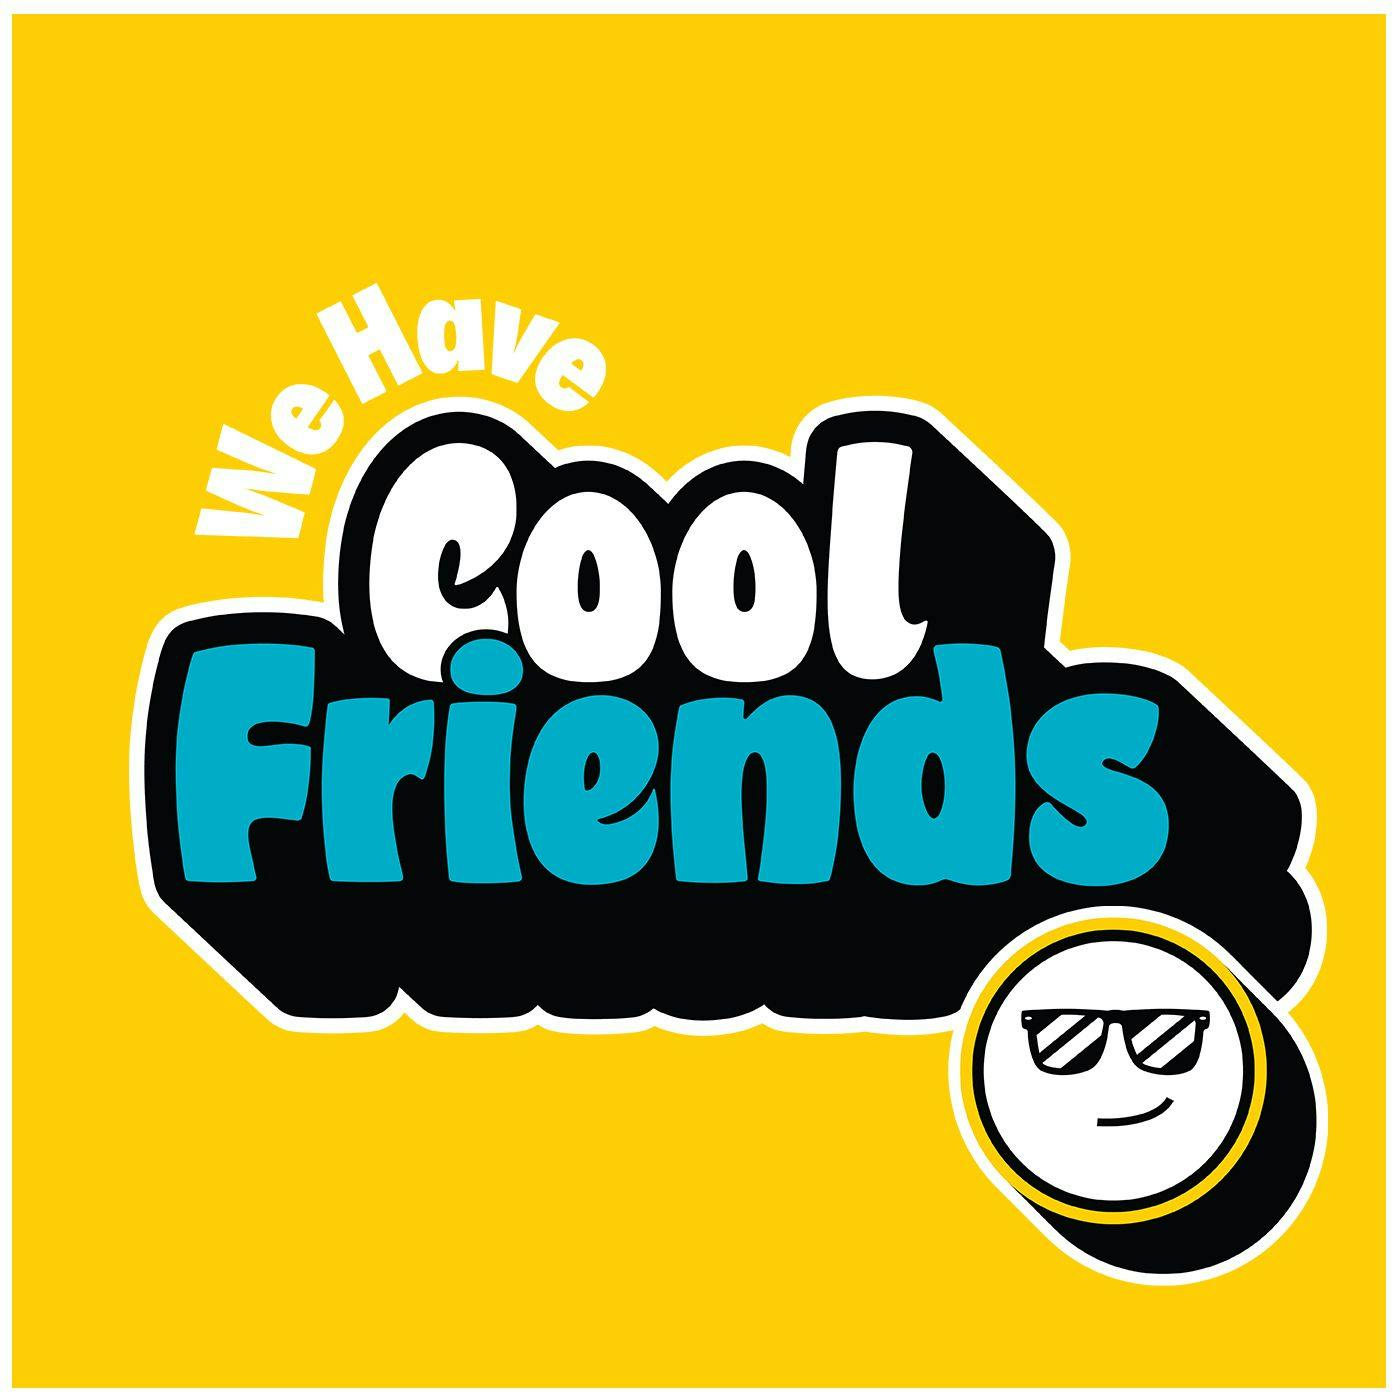 We Have Cool Friends - Mark Ellis & Ken Napzok